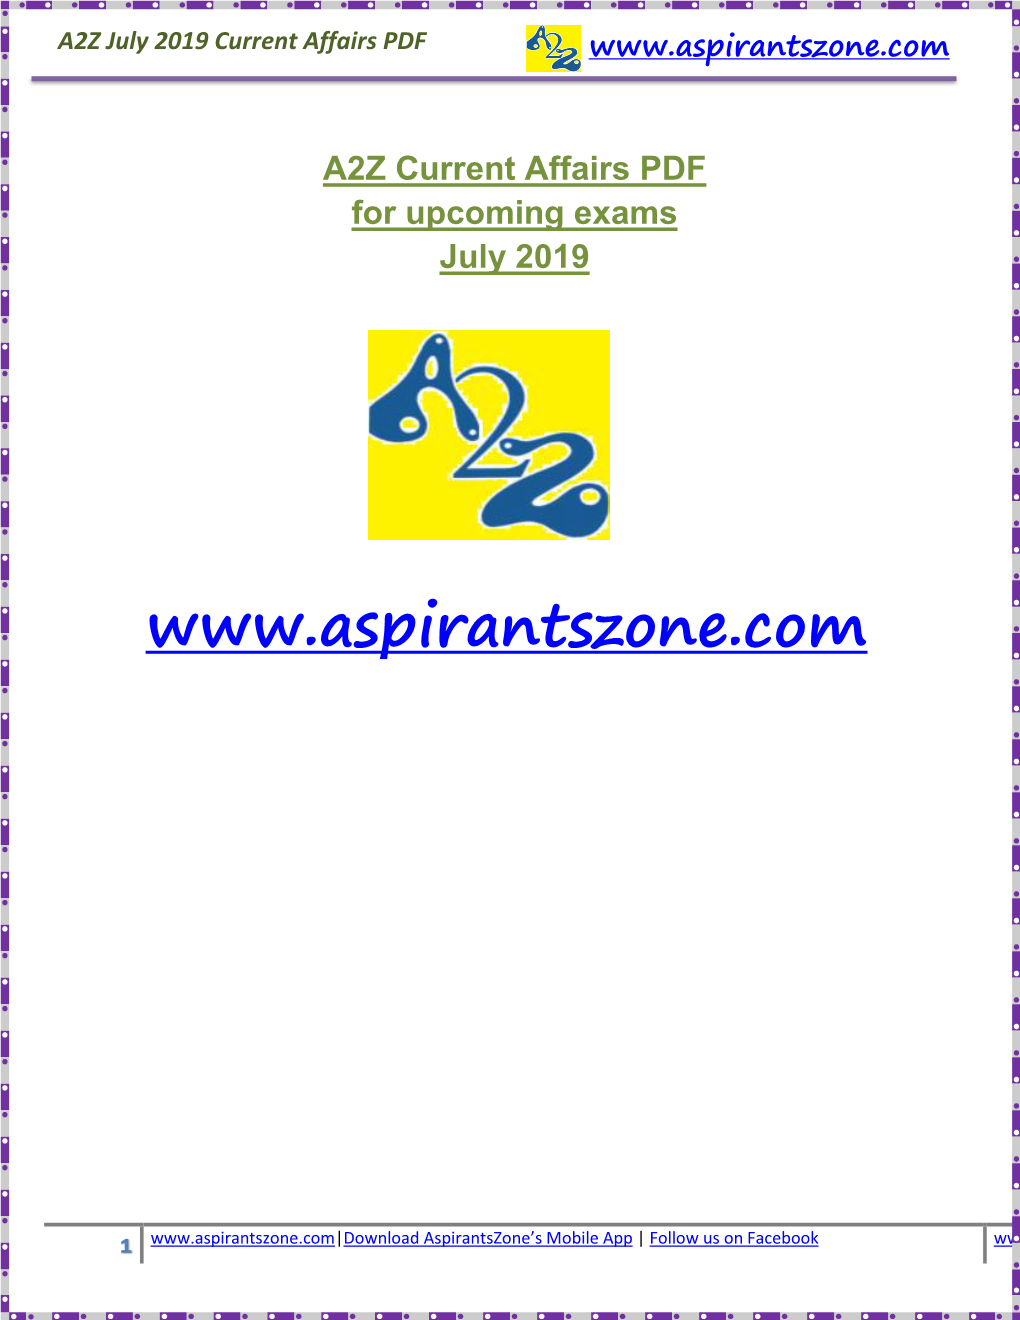 A2Z July 2019 Current Affairs PDF